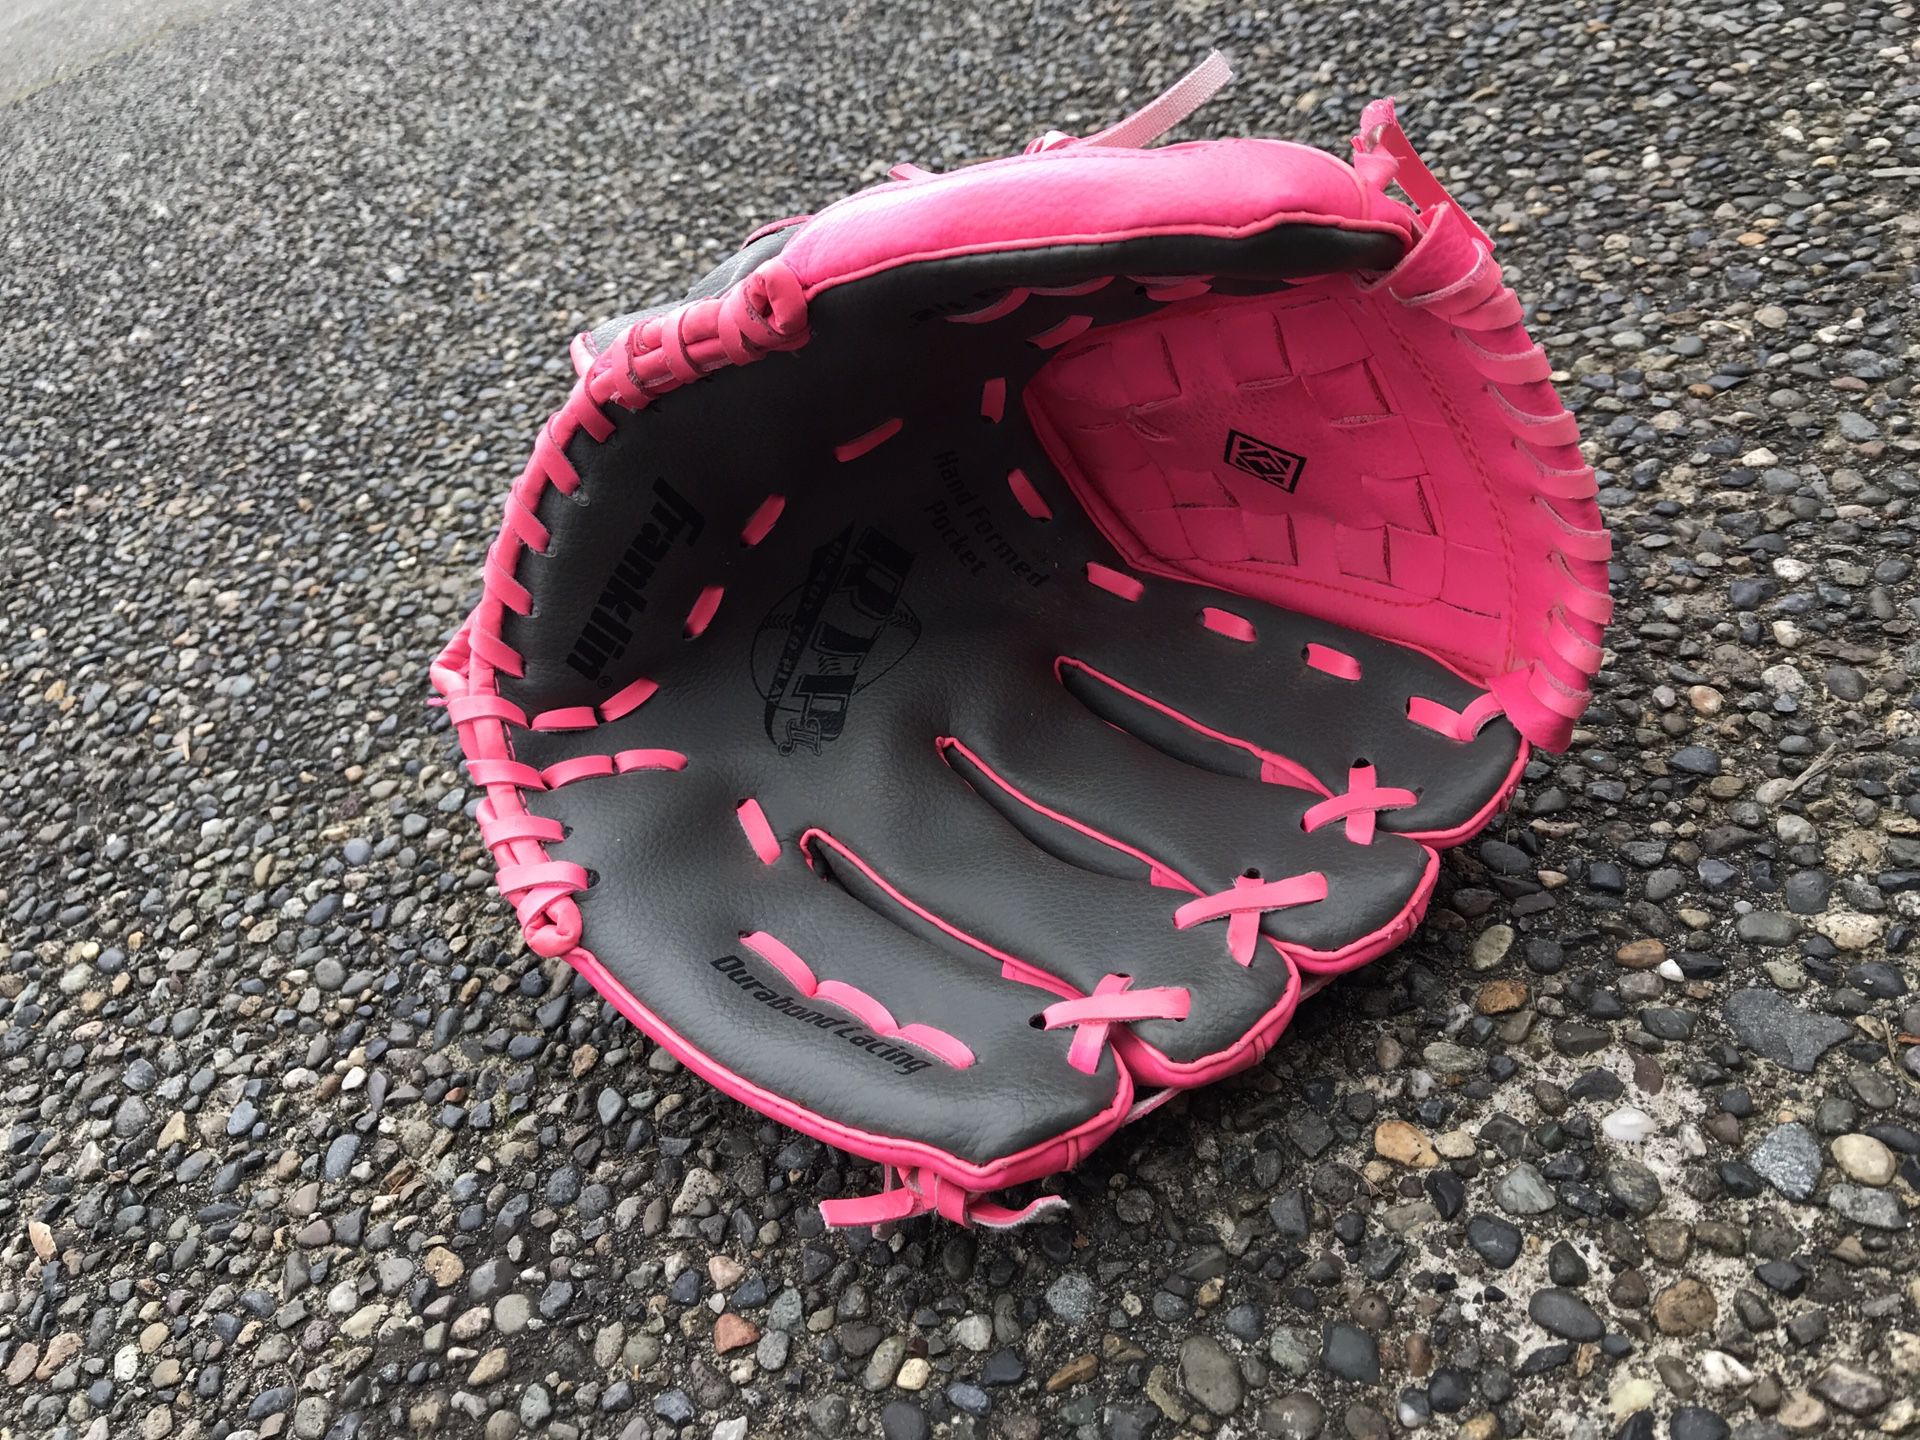 Baseball gear: 9 baseballs; girls softball glove and bat; boys batting helmet; Mariners baseball bag, baseball glove